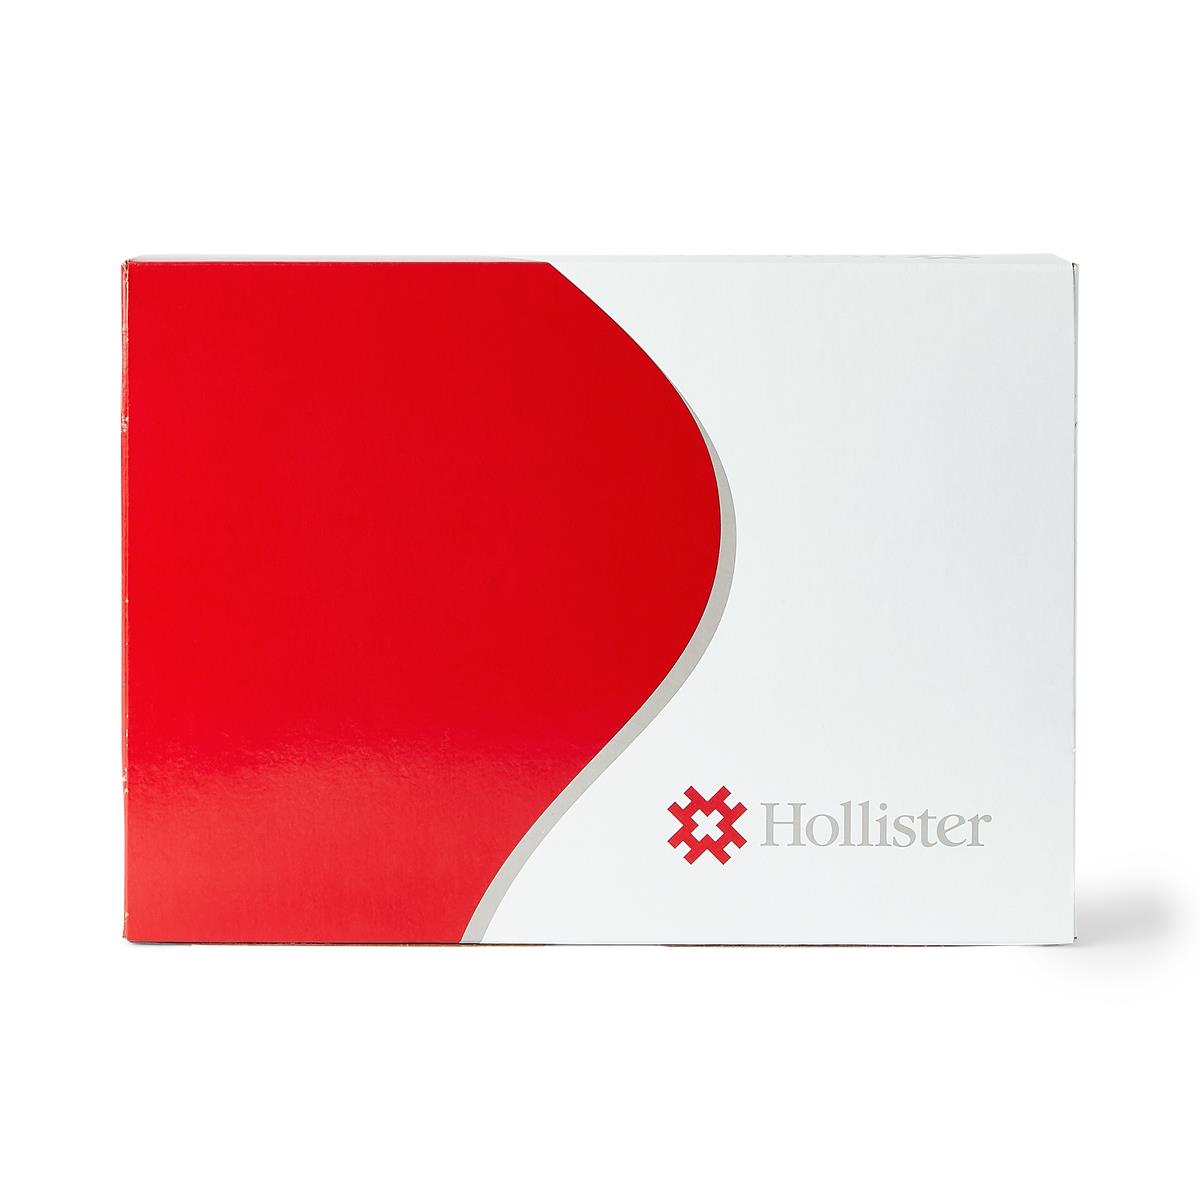 Hollister 8958 CeraPlus Premier™ One Piece Kits - Box of 5